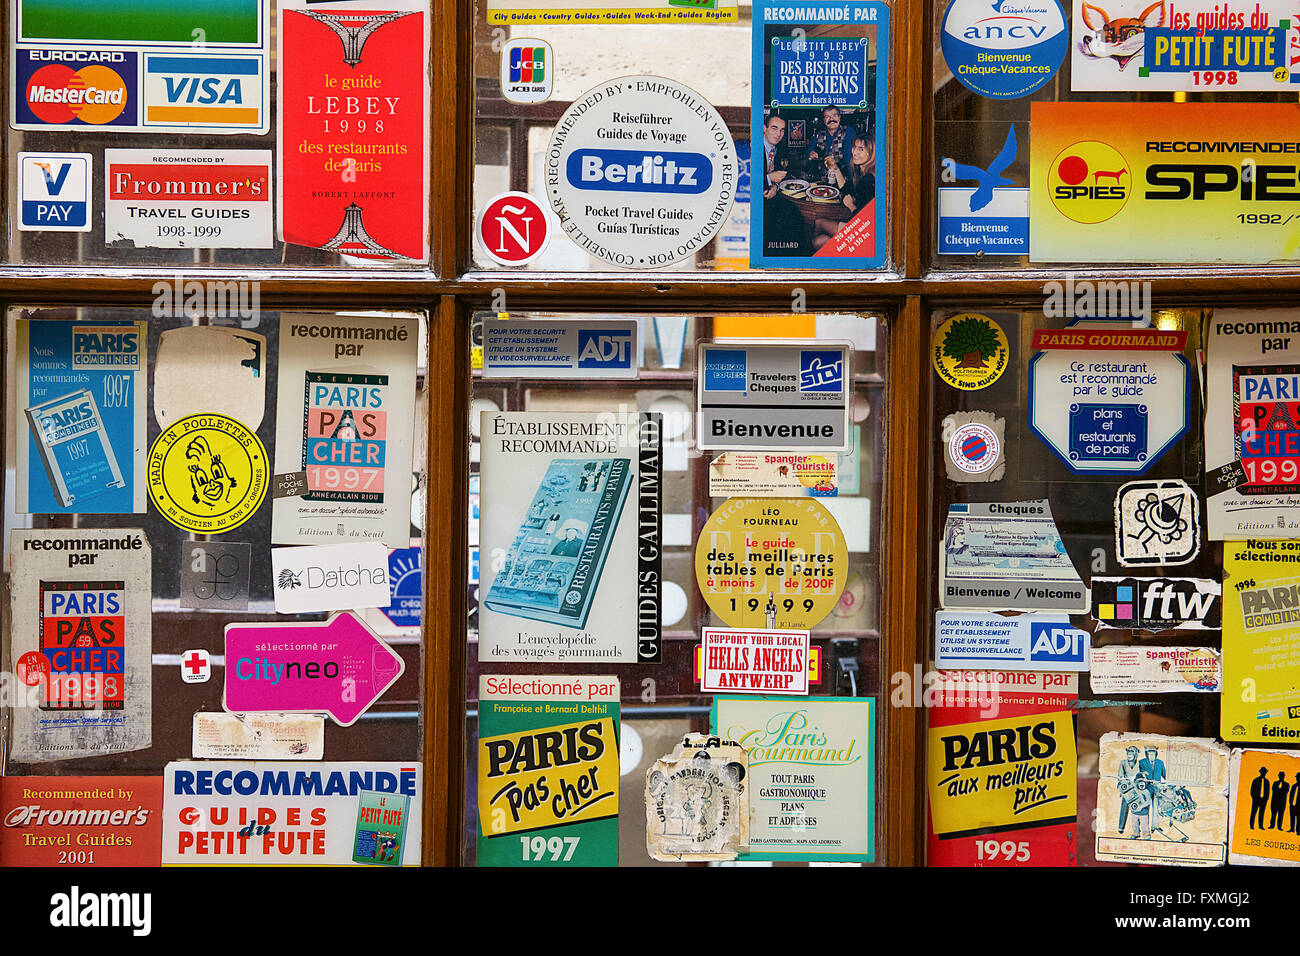 Travel Guides Sticker on Window, Paris, France Stock Photo